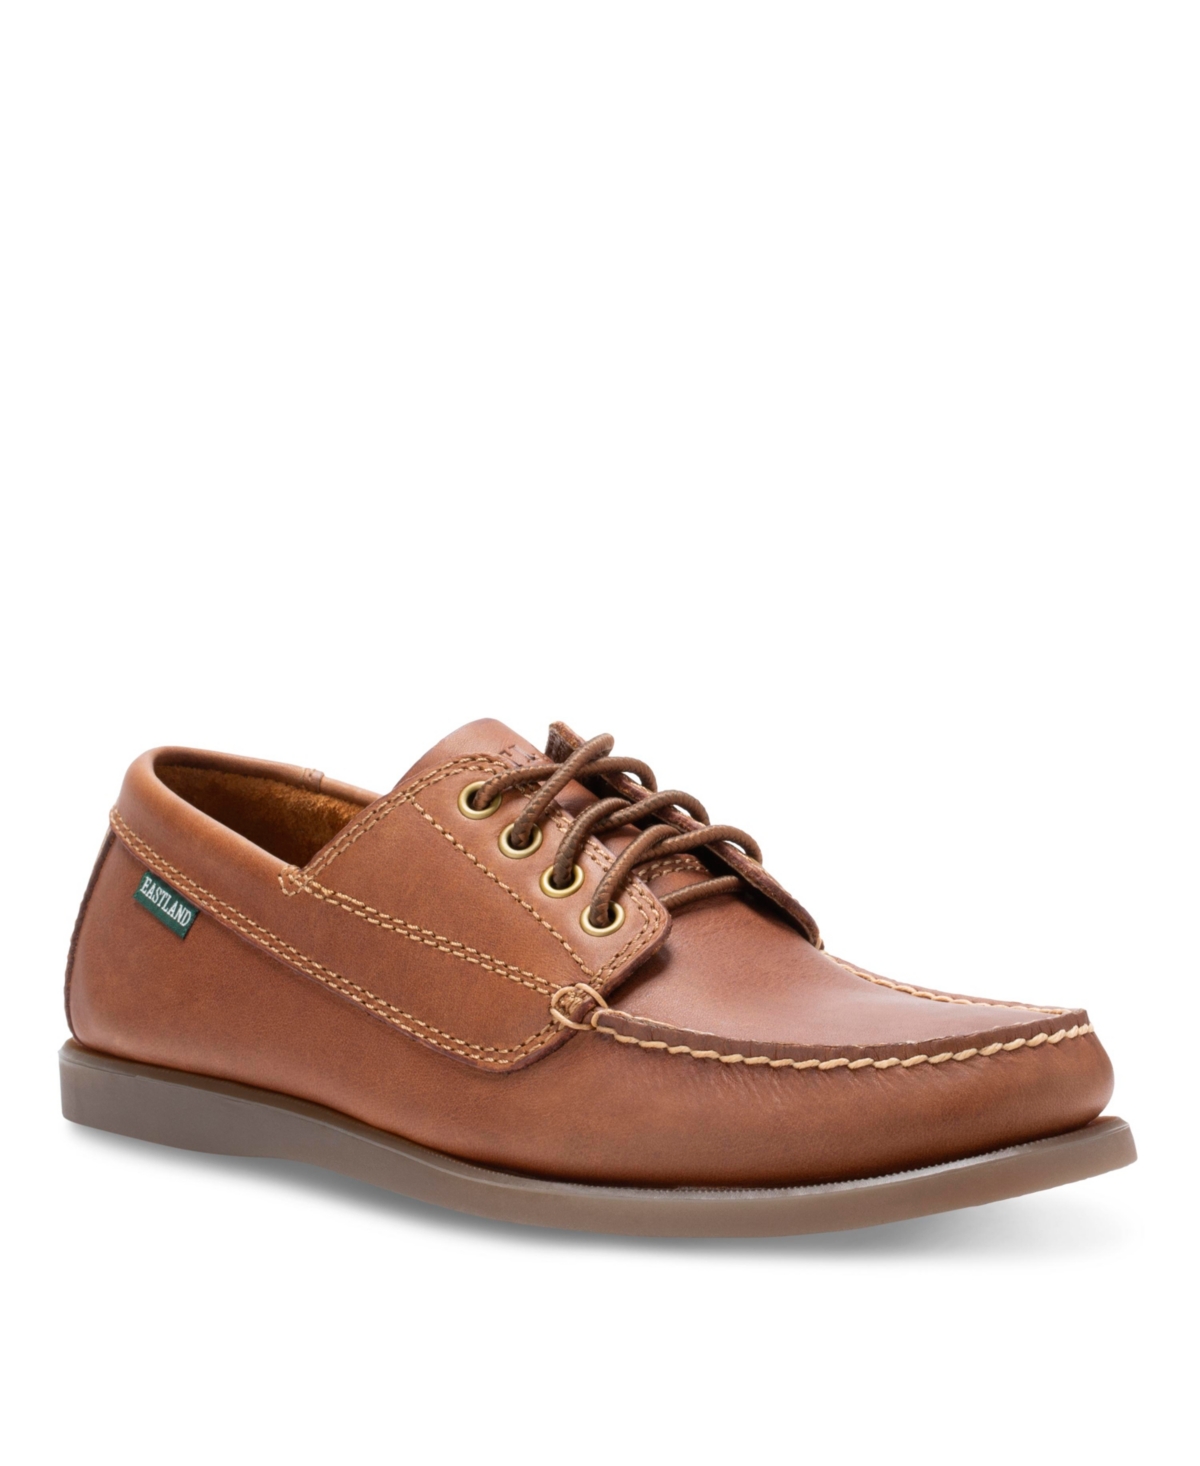 Men's Falmouth Oxford Comfort Shoes - Oak